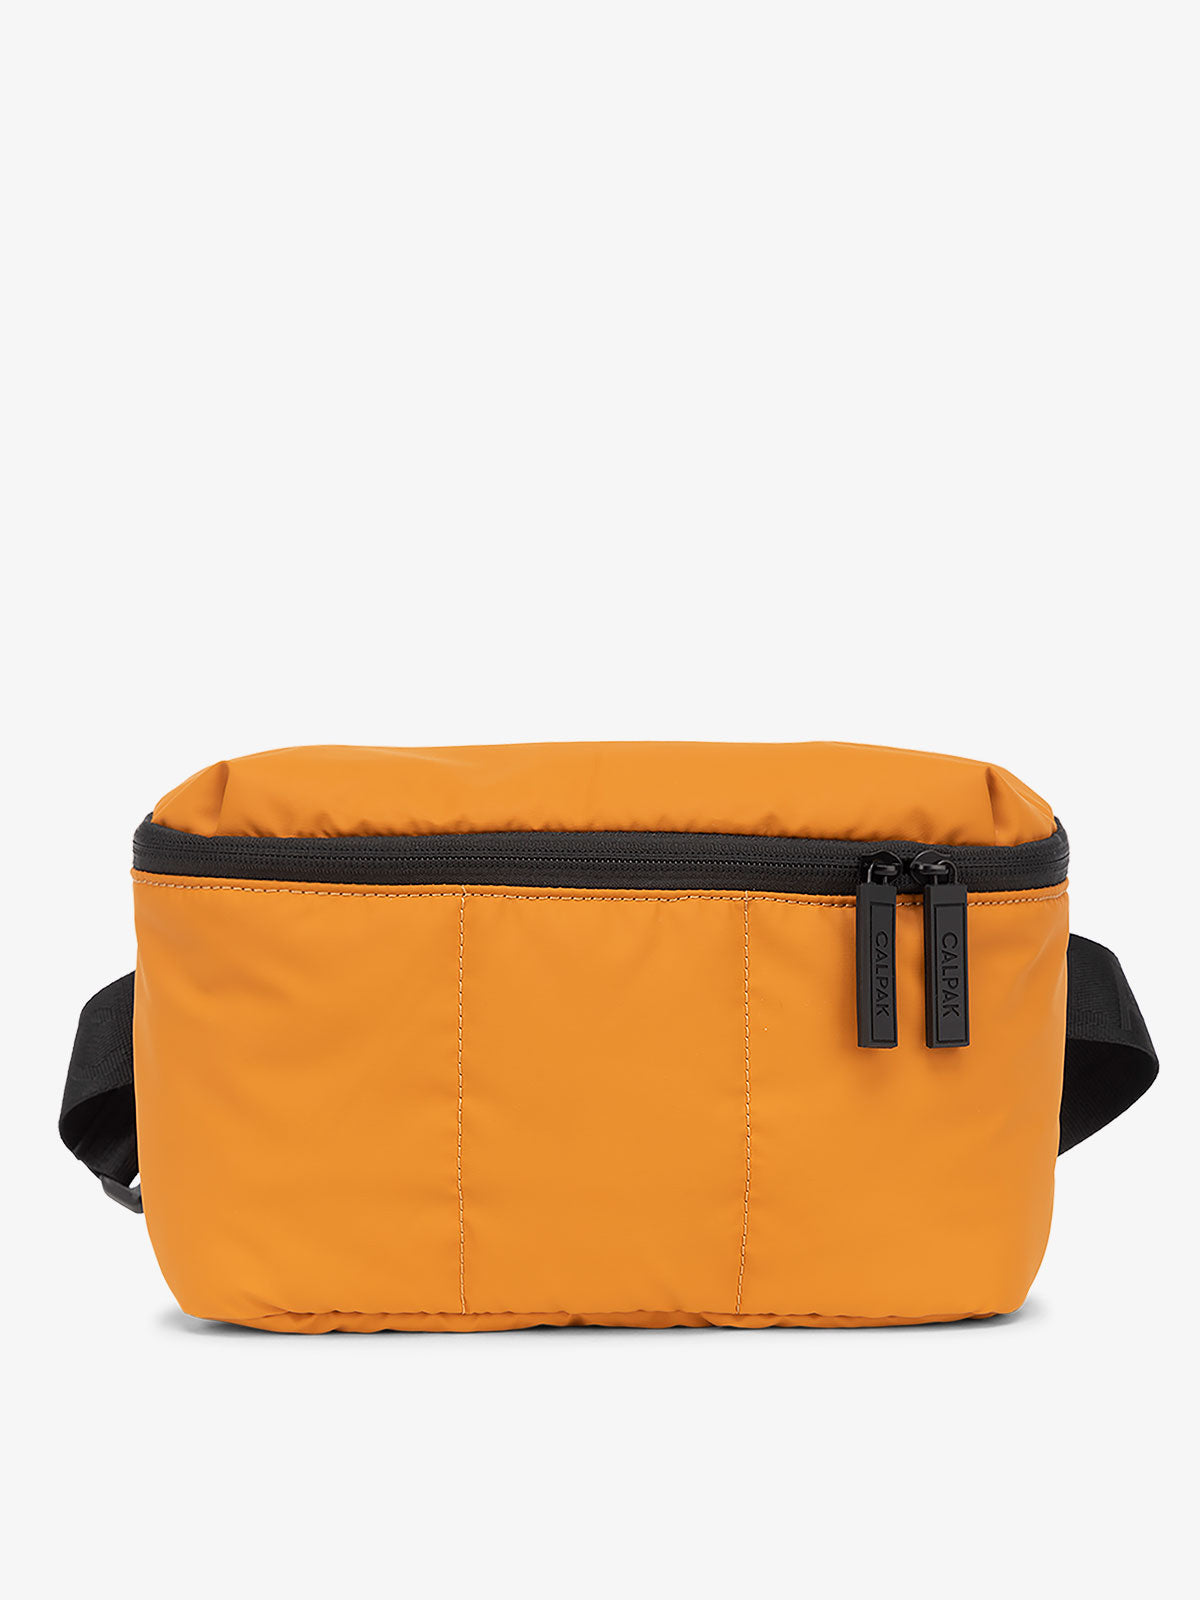 CALPAK Luka Belt Bag in pumpkin